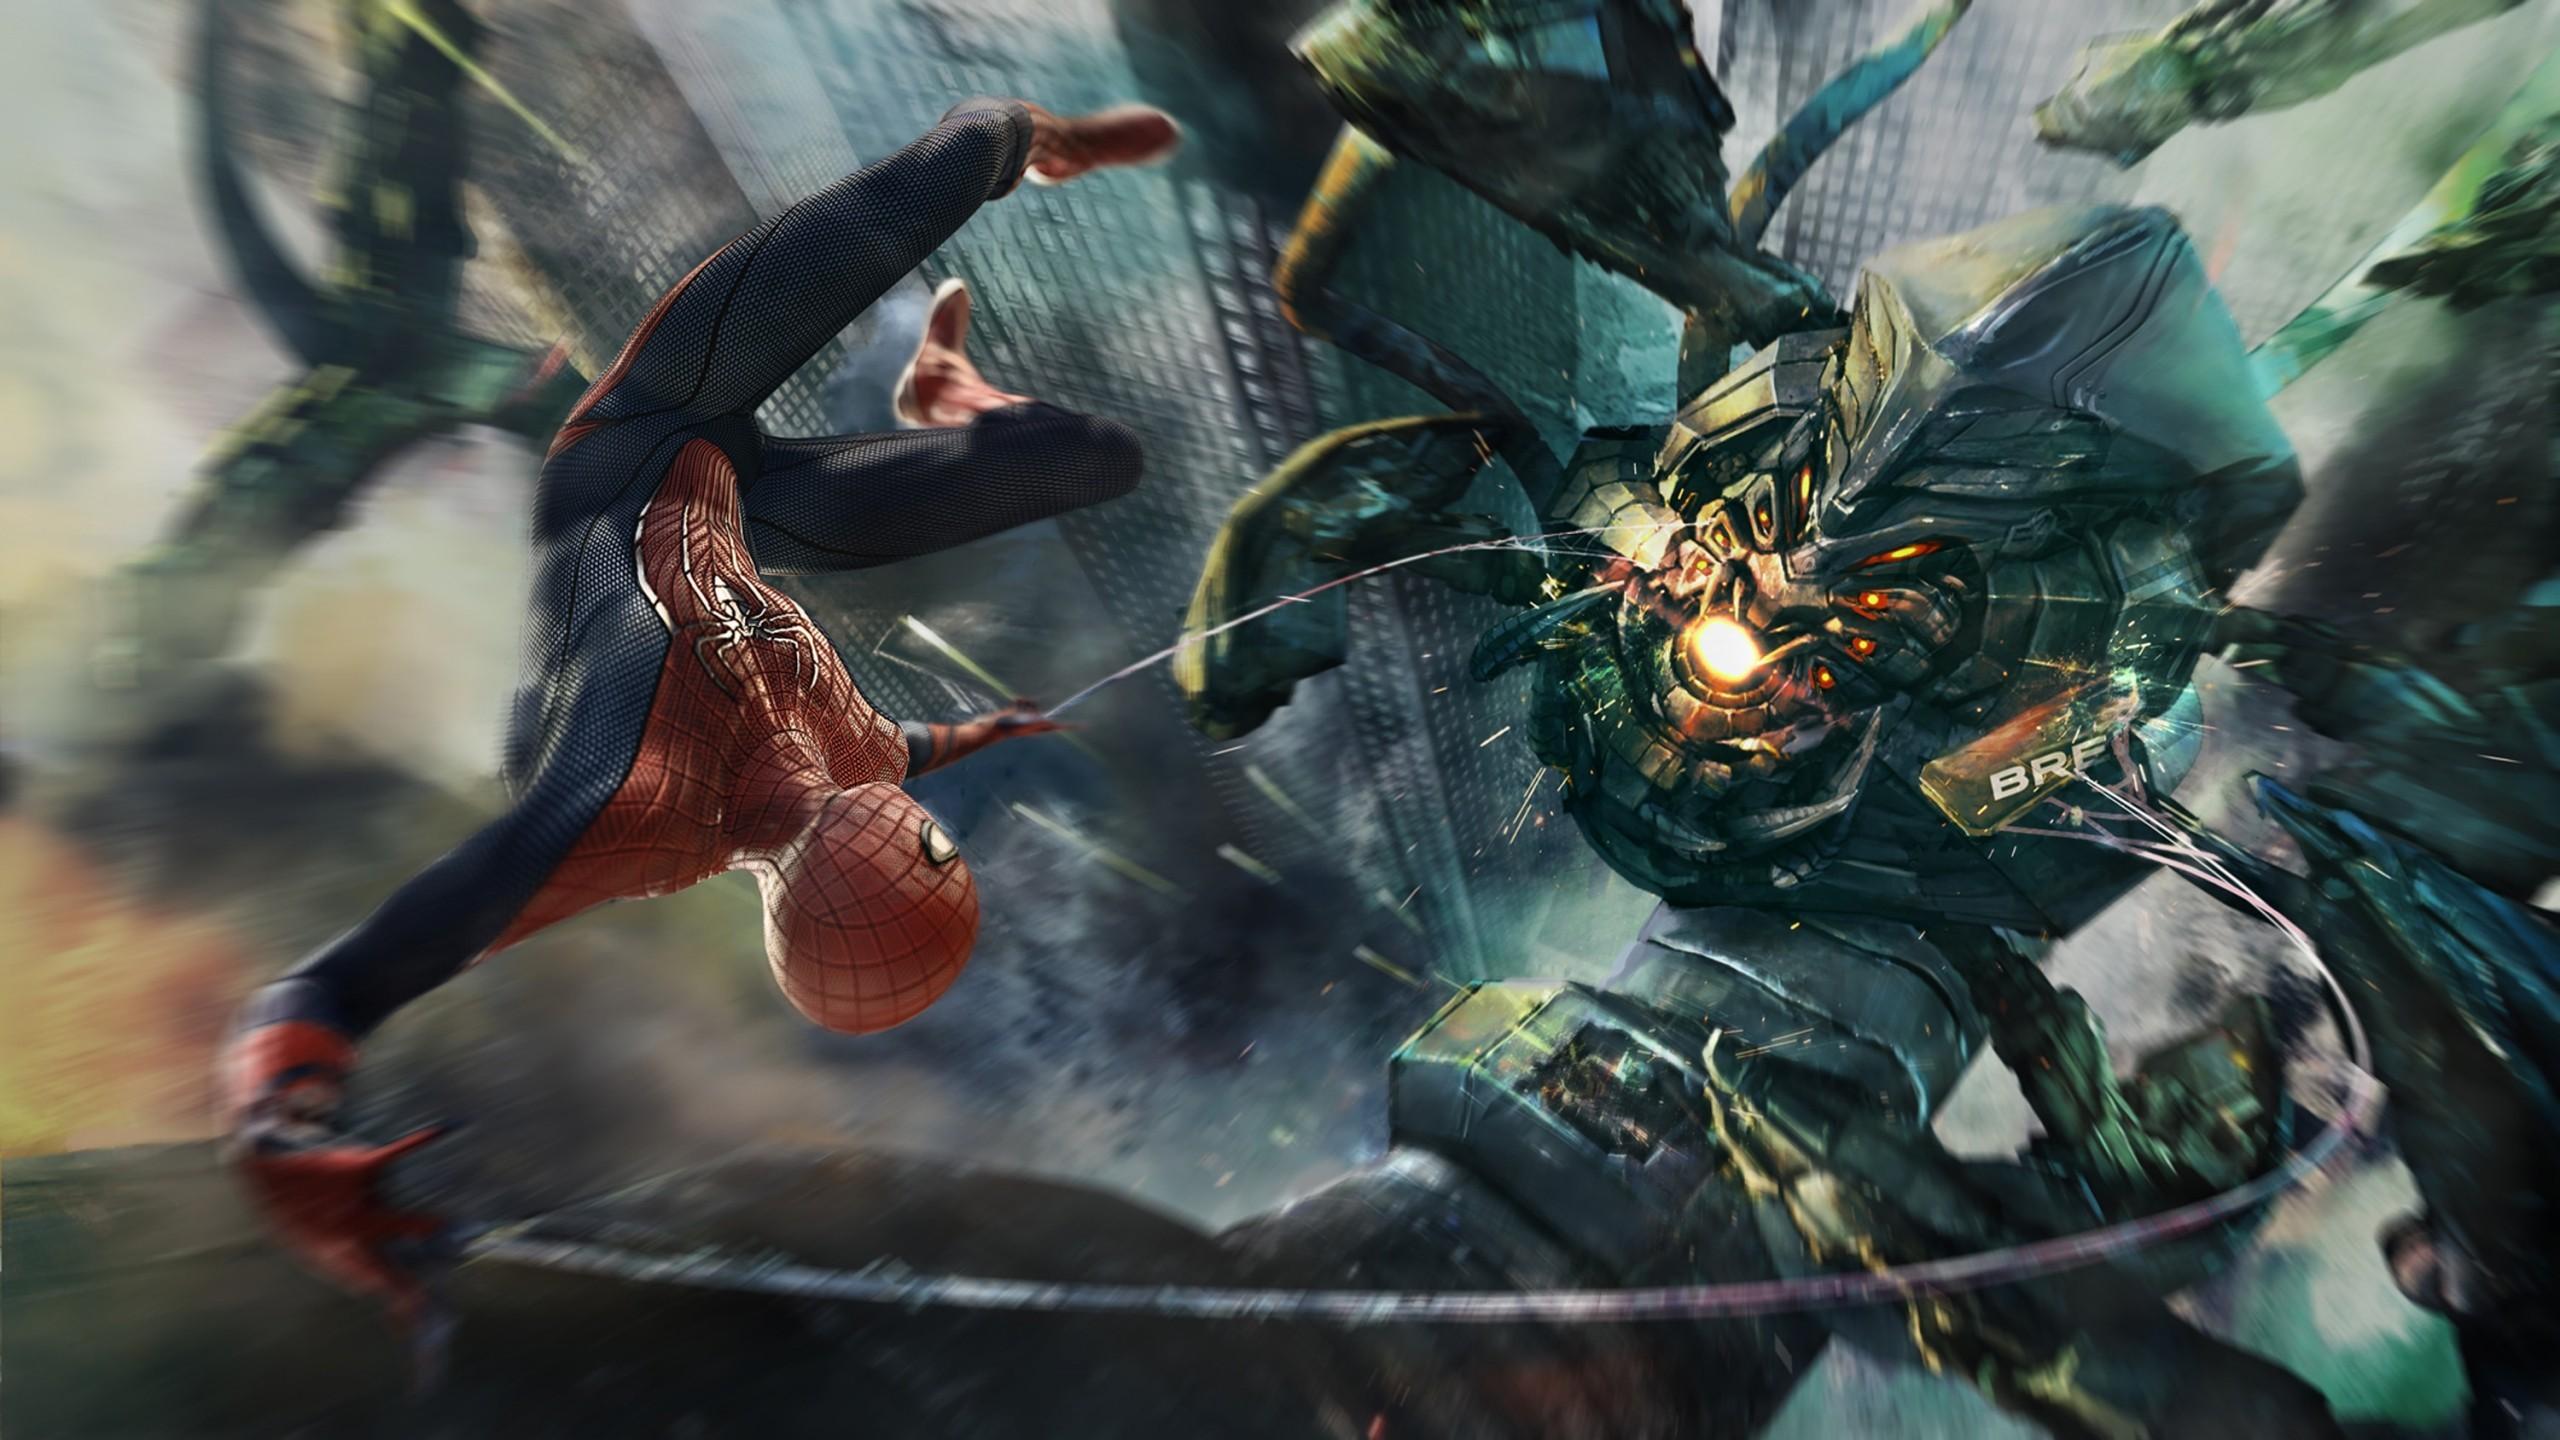 Marvel comics the amazing spiderman movies wallpaper. AllWallpaper